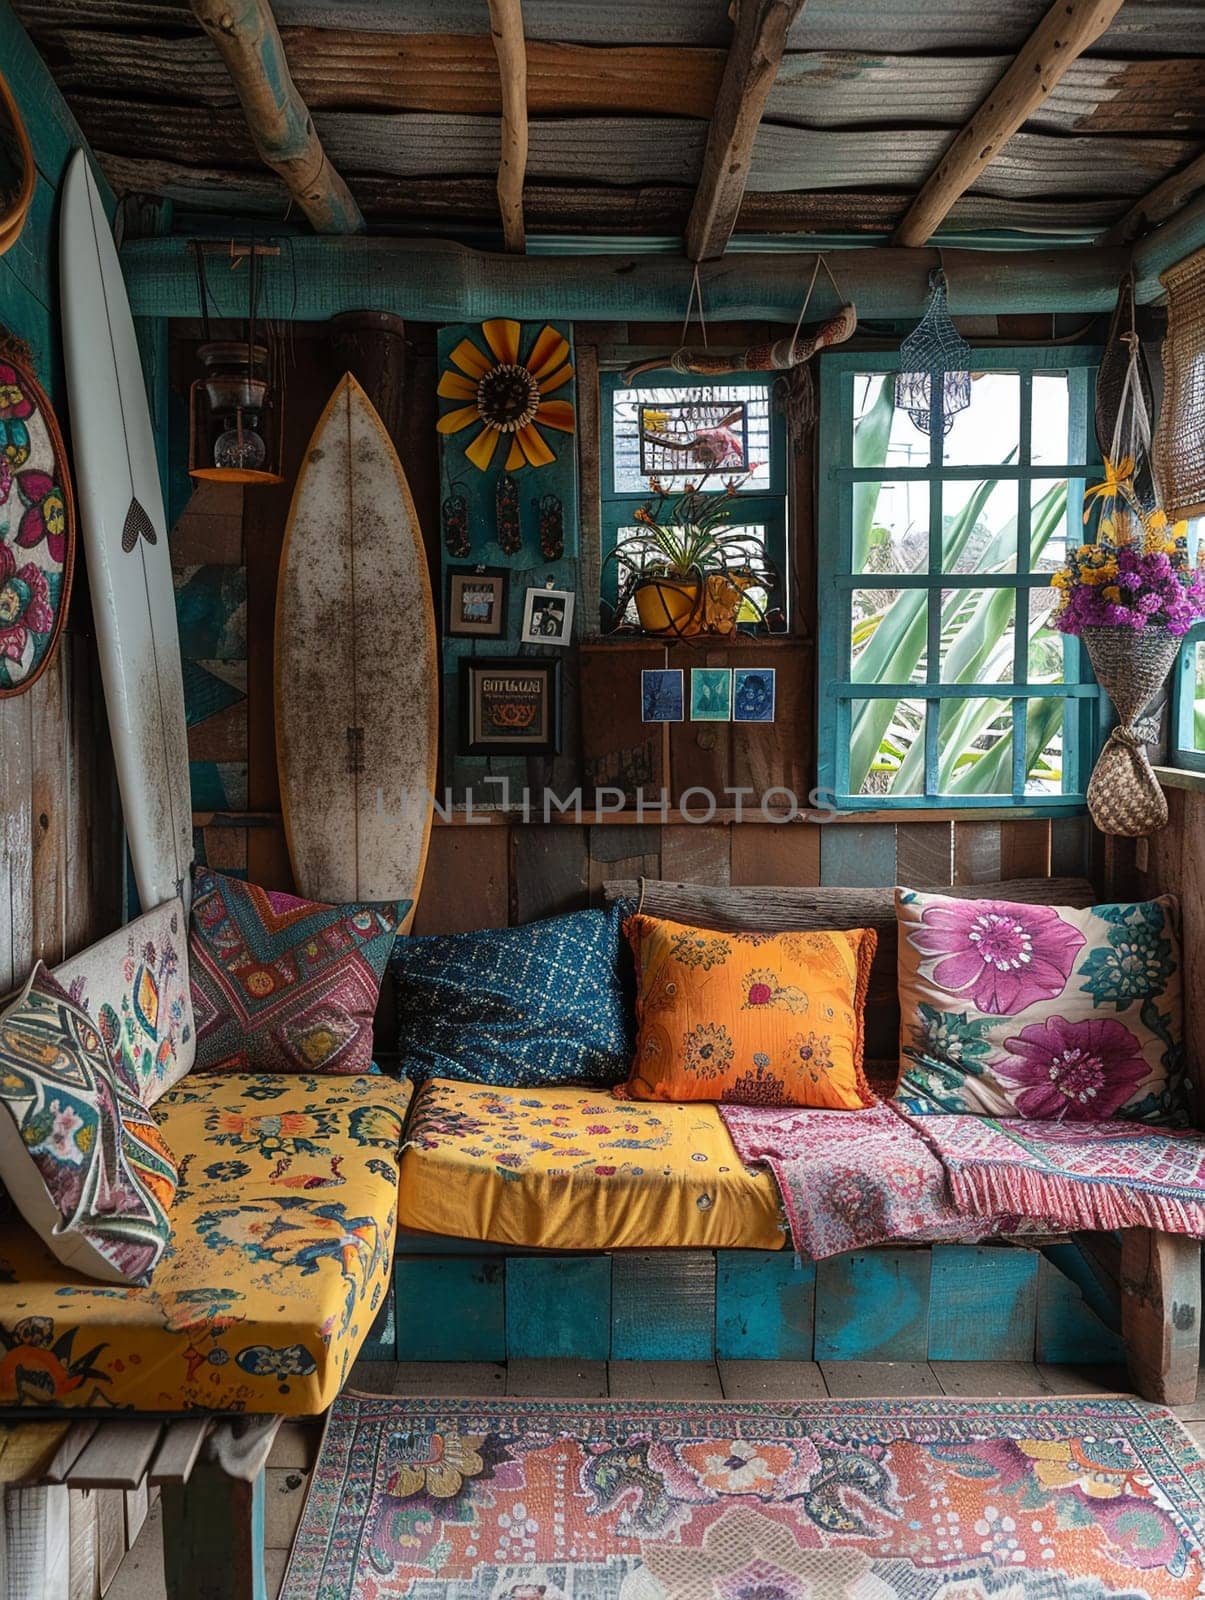 Bohemian beach hut with colorful fabrics, hammocks, and surfboards.